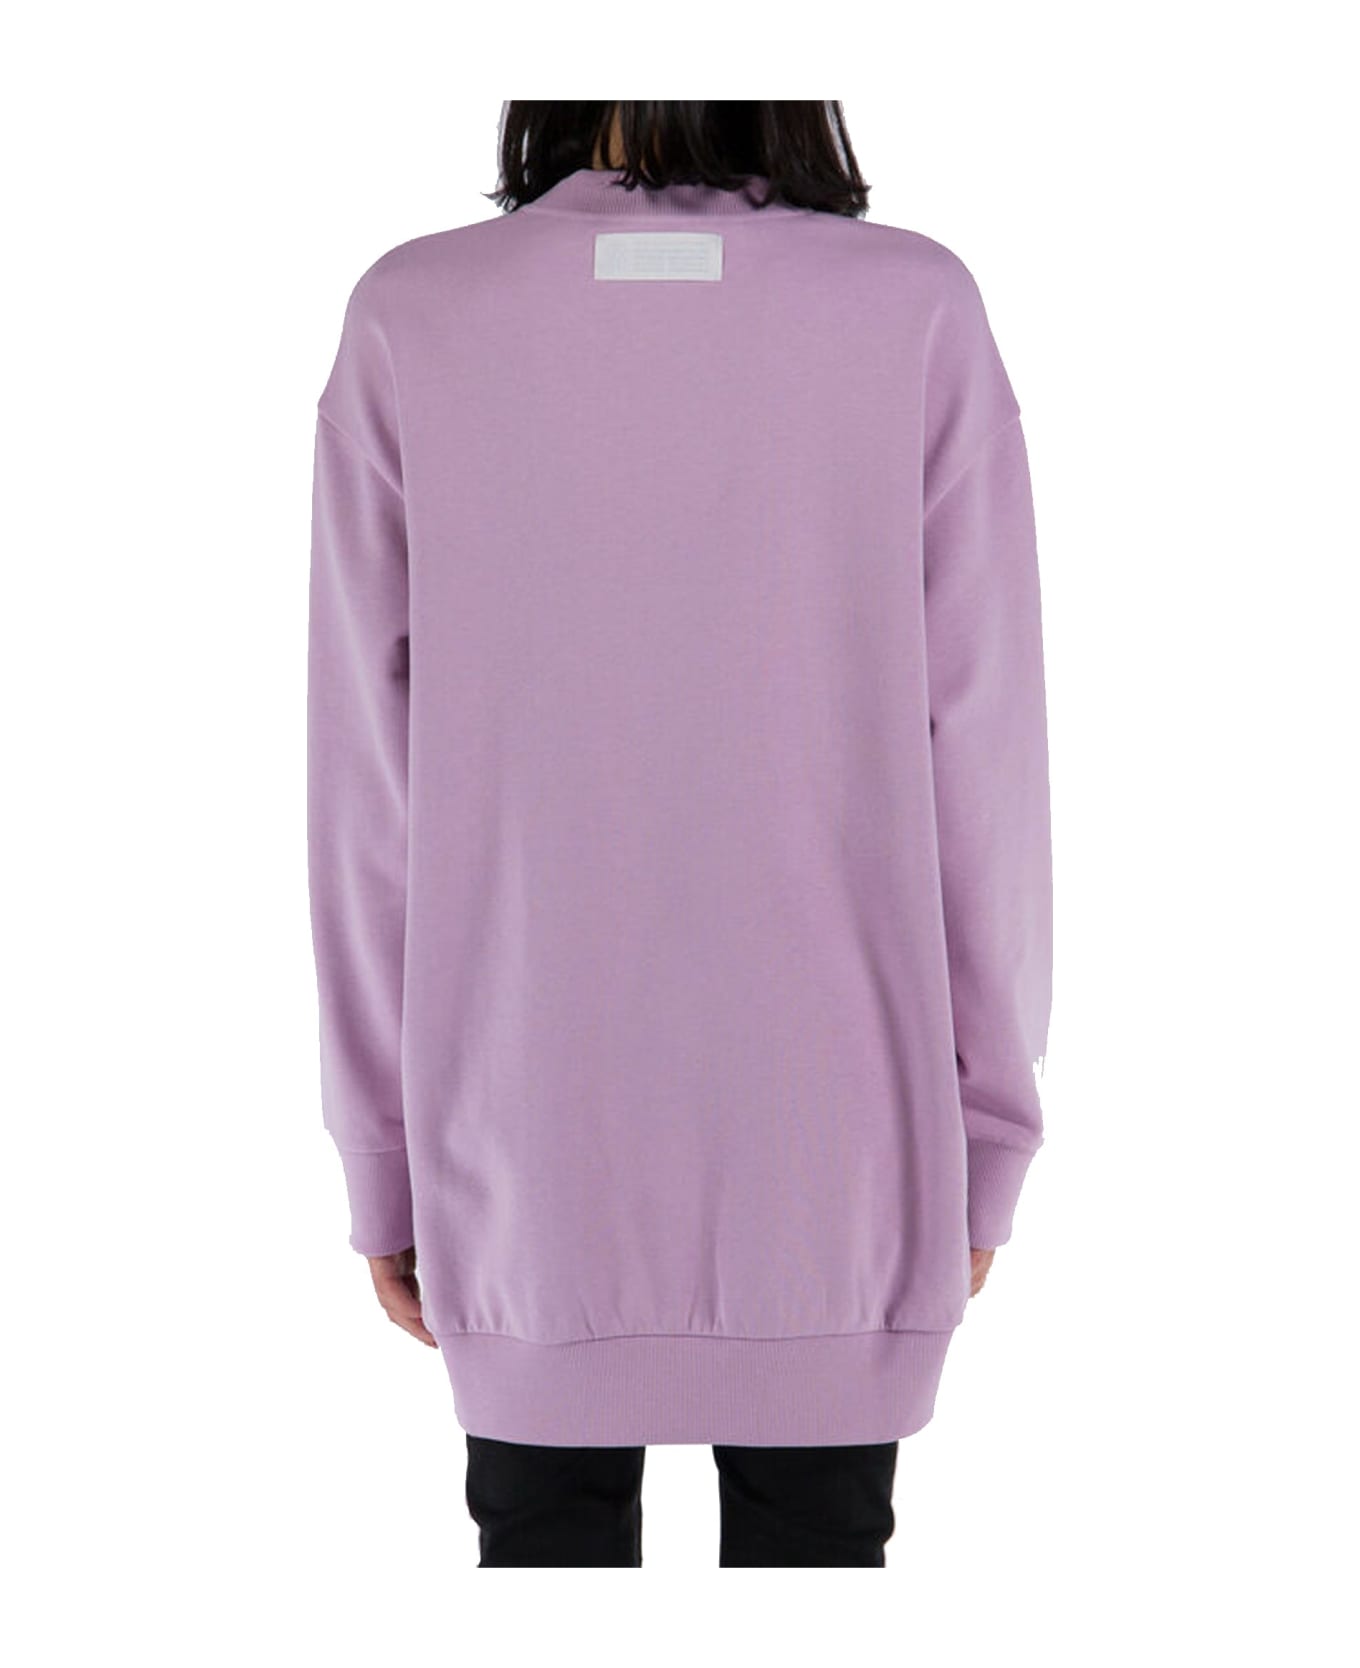 Stella McCartney Cotton Sweater - Pink ニットウェア